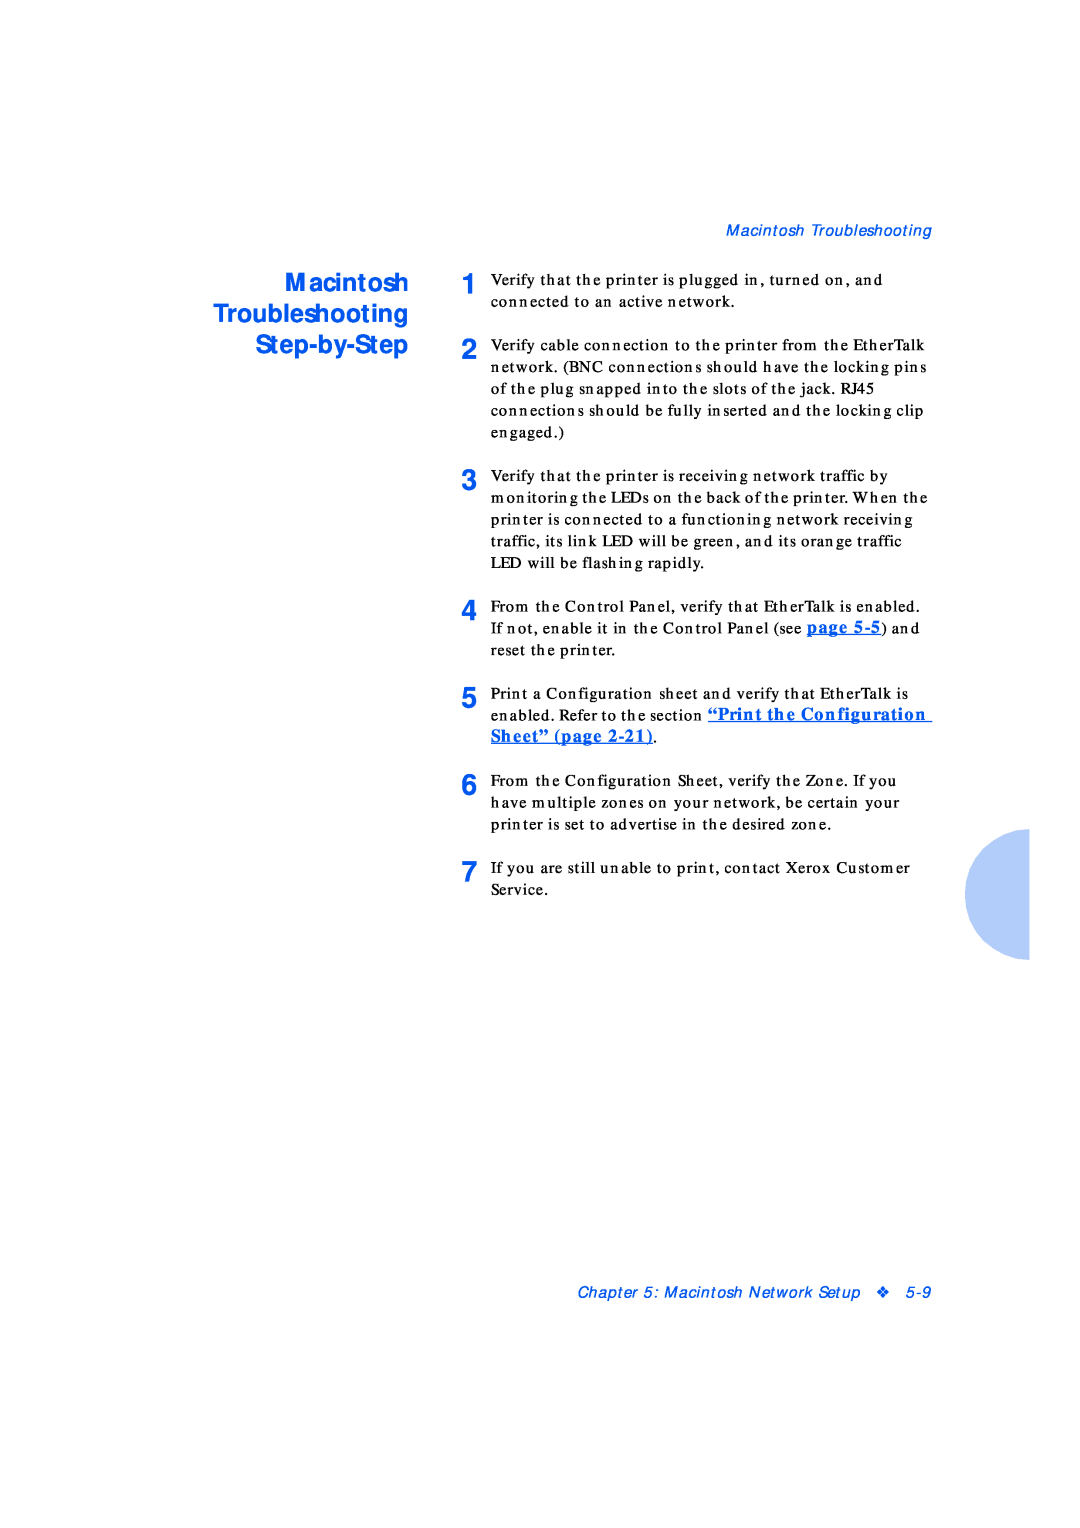 Xerox Network Laser Printers manual Macintosh Troubleshooting Step-by-Step, Sheet” page, Macintosh Network Setup 